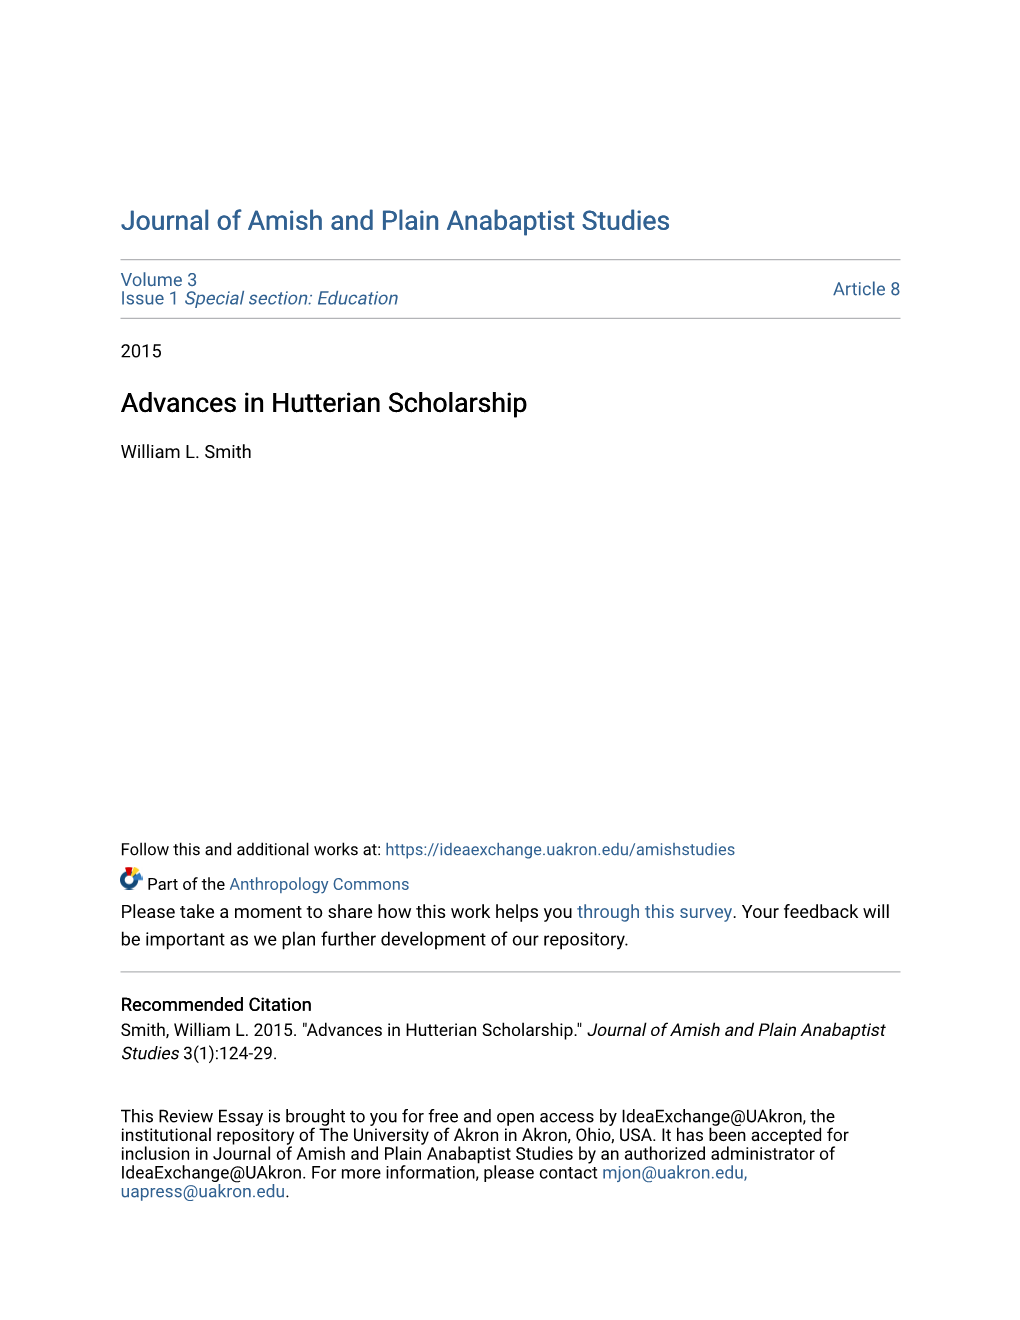 Advances in Hutterian Scholarship